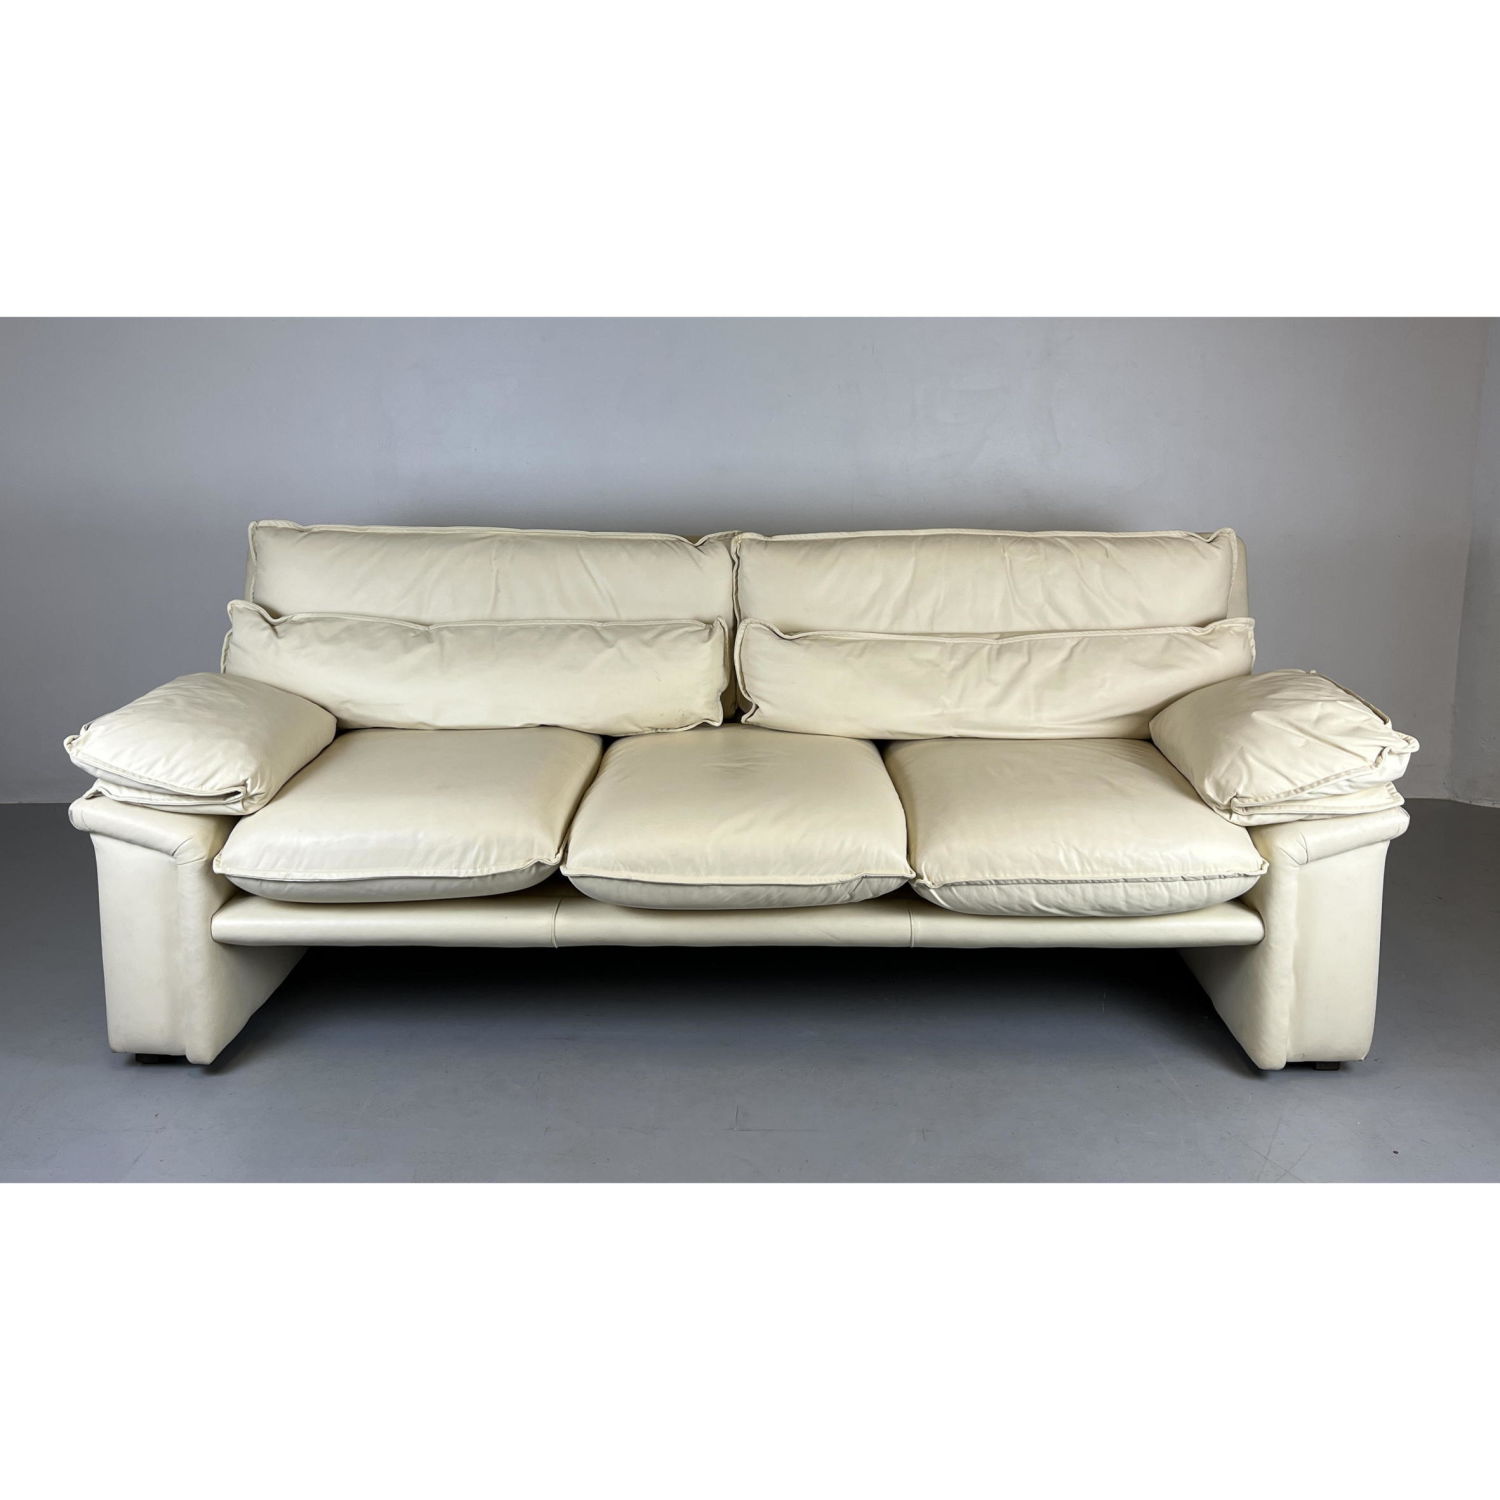 BERNHARDT Modernist Leather Sofa 2fd02e